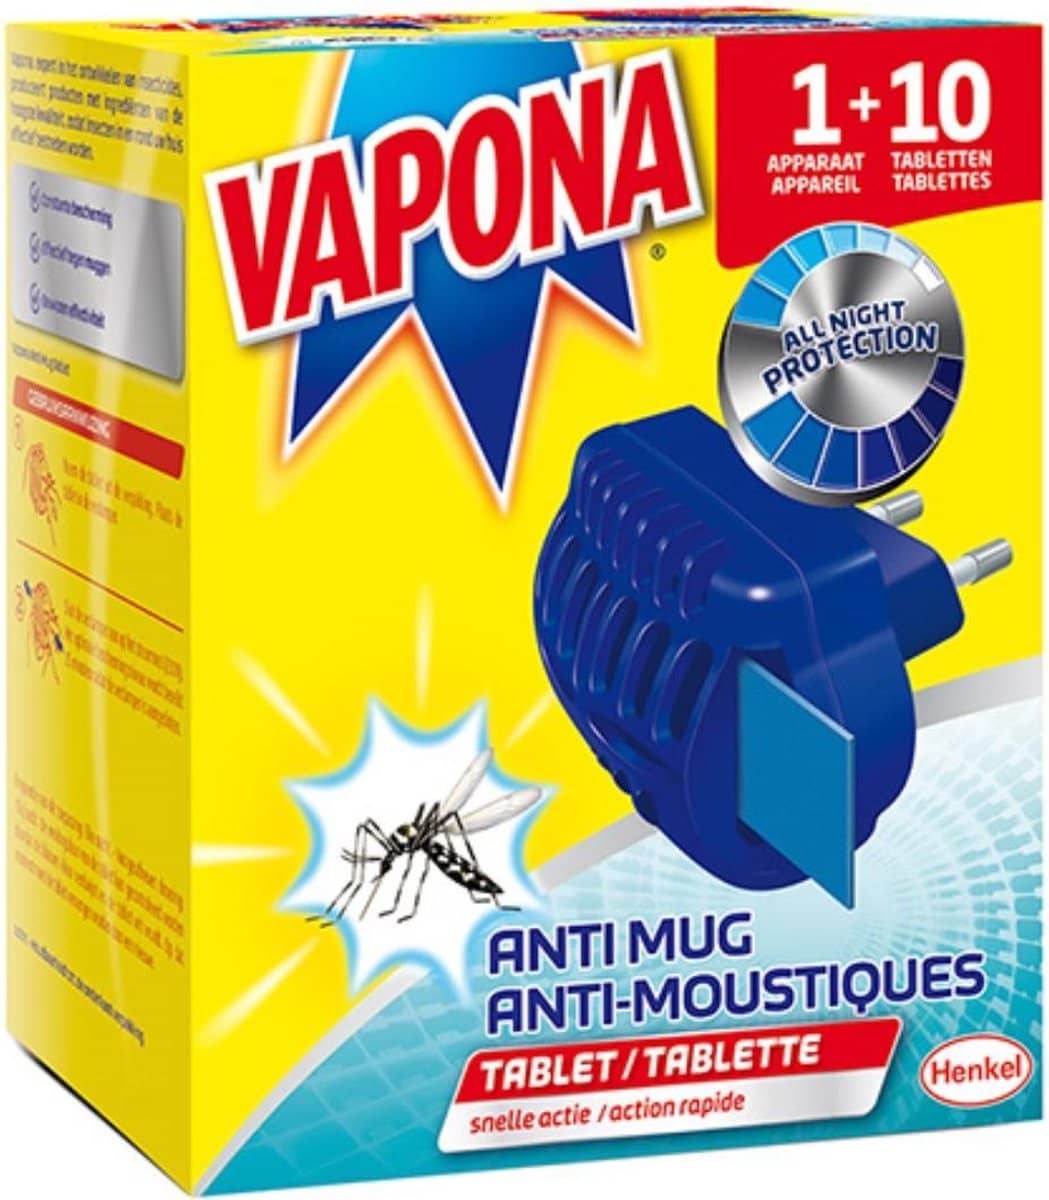 Vapona Anti Mug Stekker met 10 Tabletten. Werkt op basis van tabletten